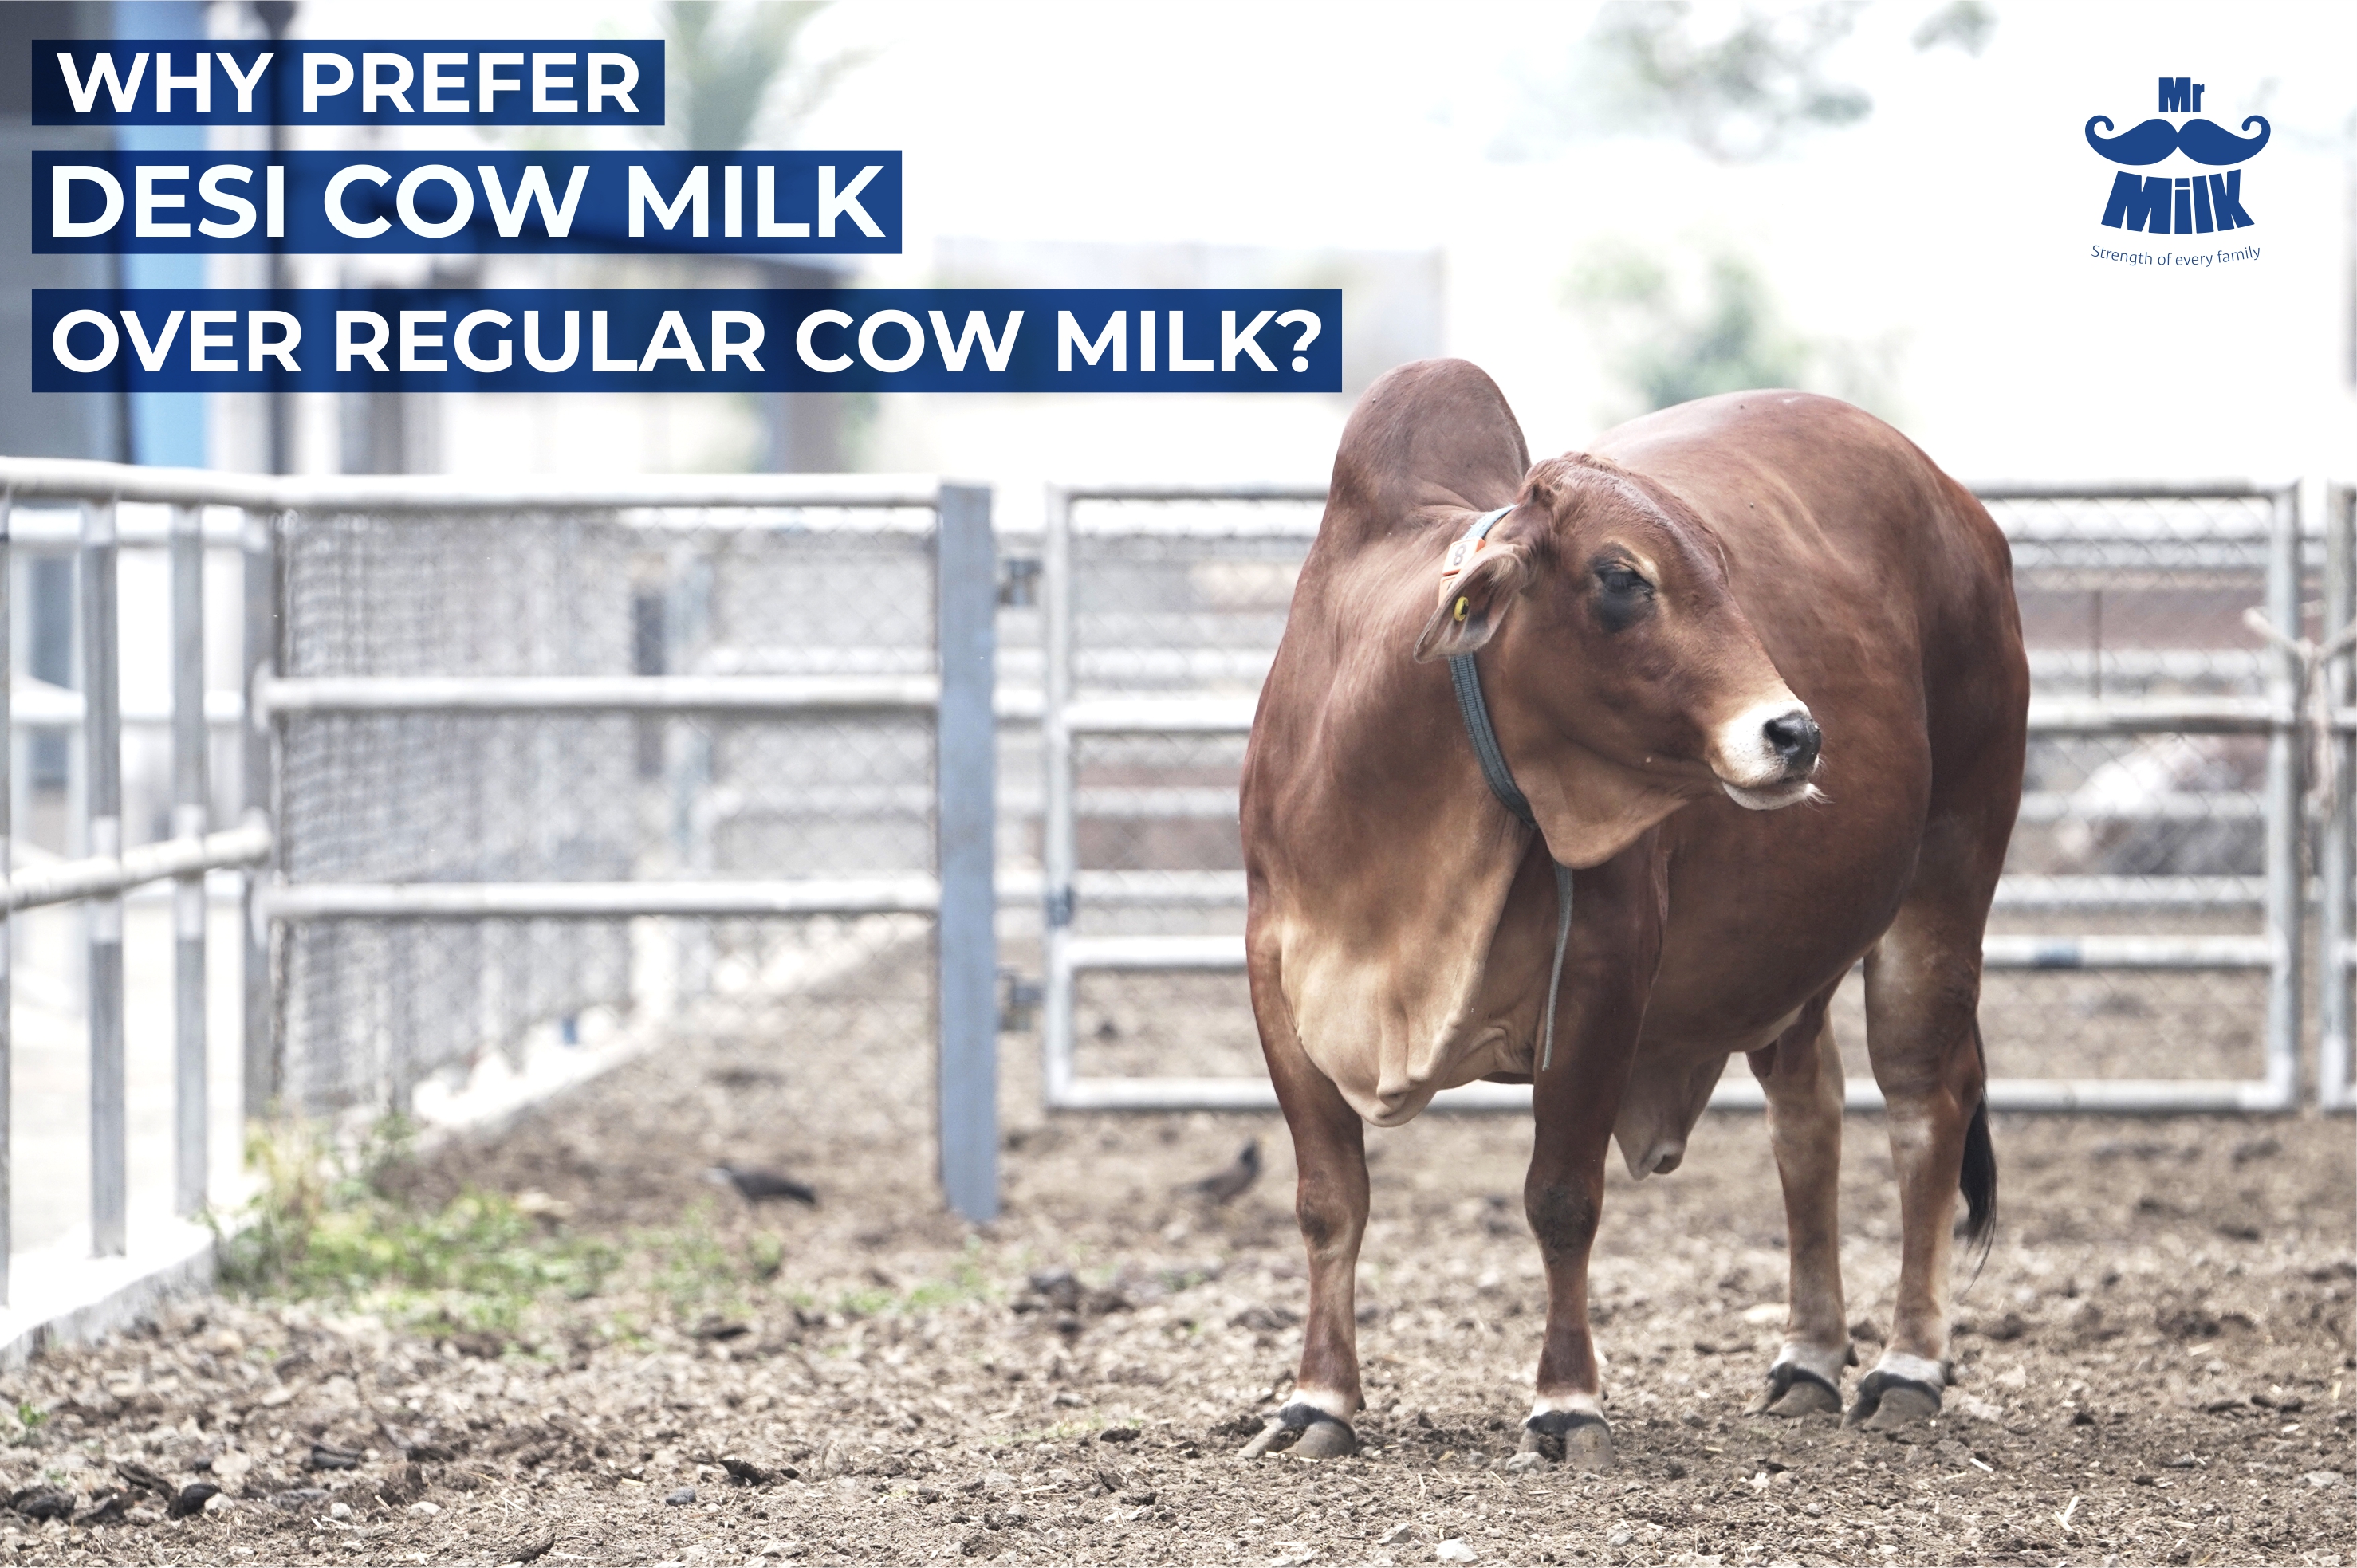 Why Prefer Desi Cow Milk Over Regular Cow Milk?